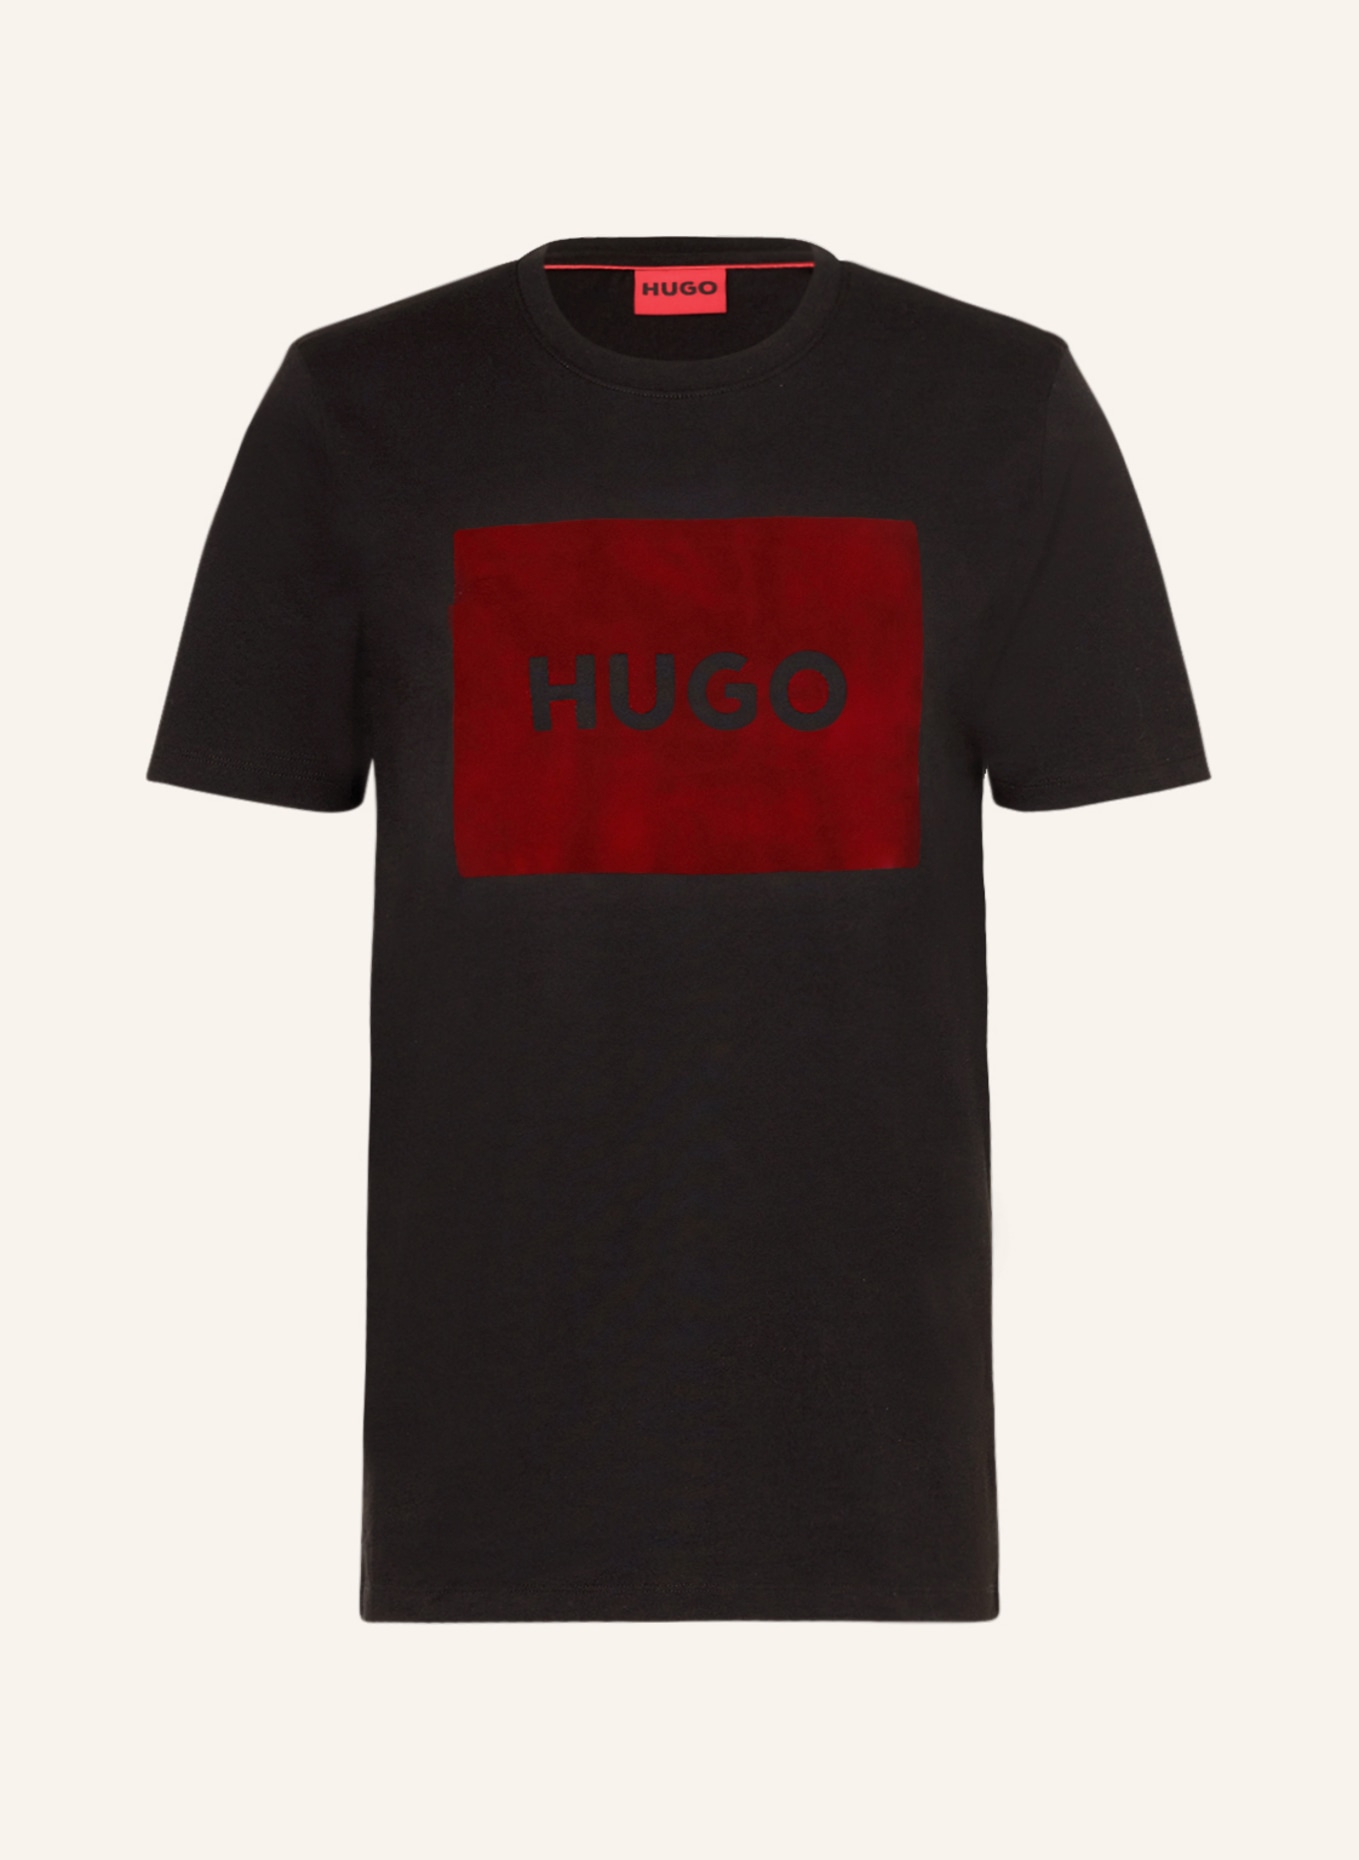 HUGO T-Shirt DULIVE, Farbe: SCHWARZ/ DUNKELROT (Bild 1)